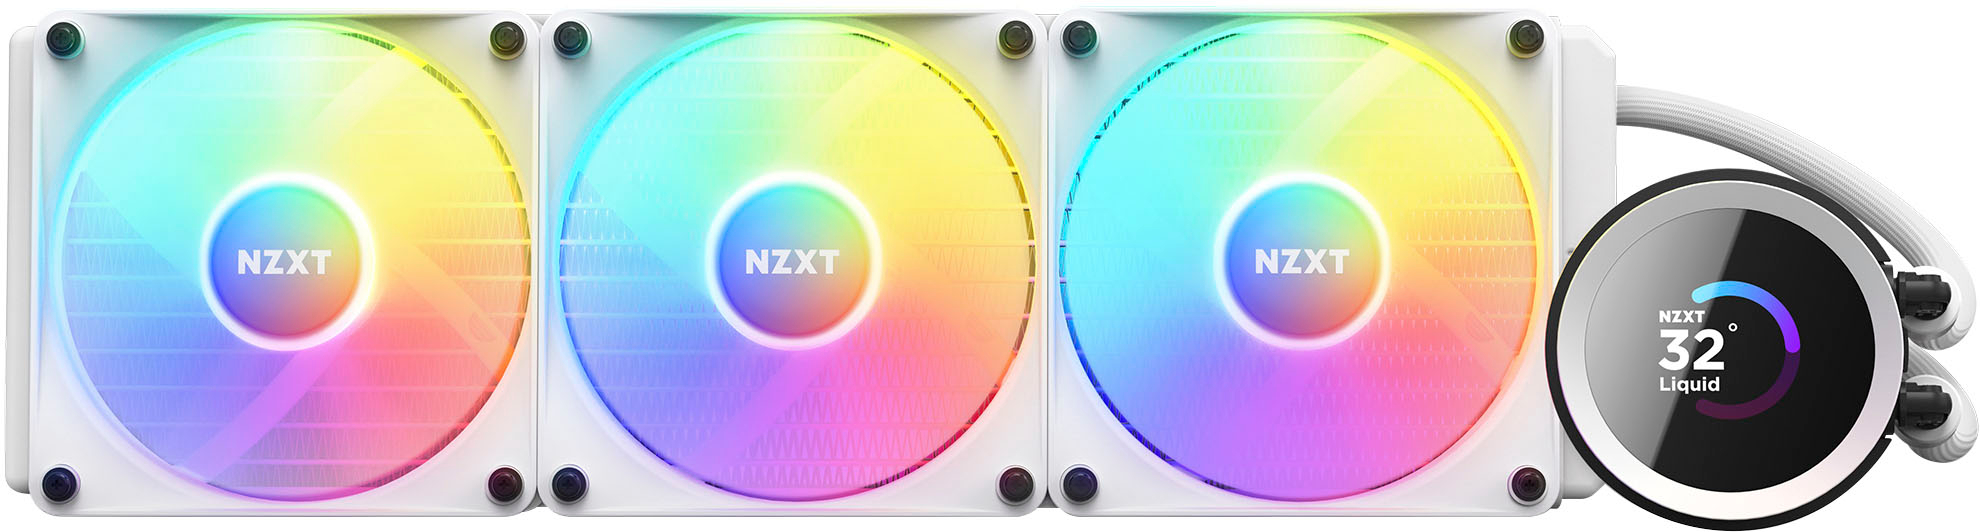 NZXT Kraken 360 RGB LCD Display Kit Líquida